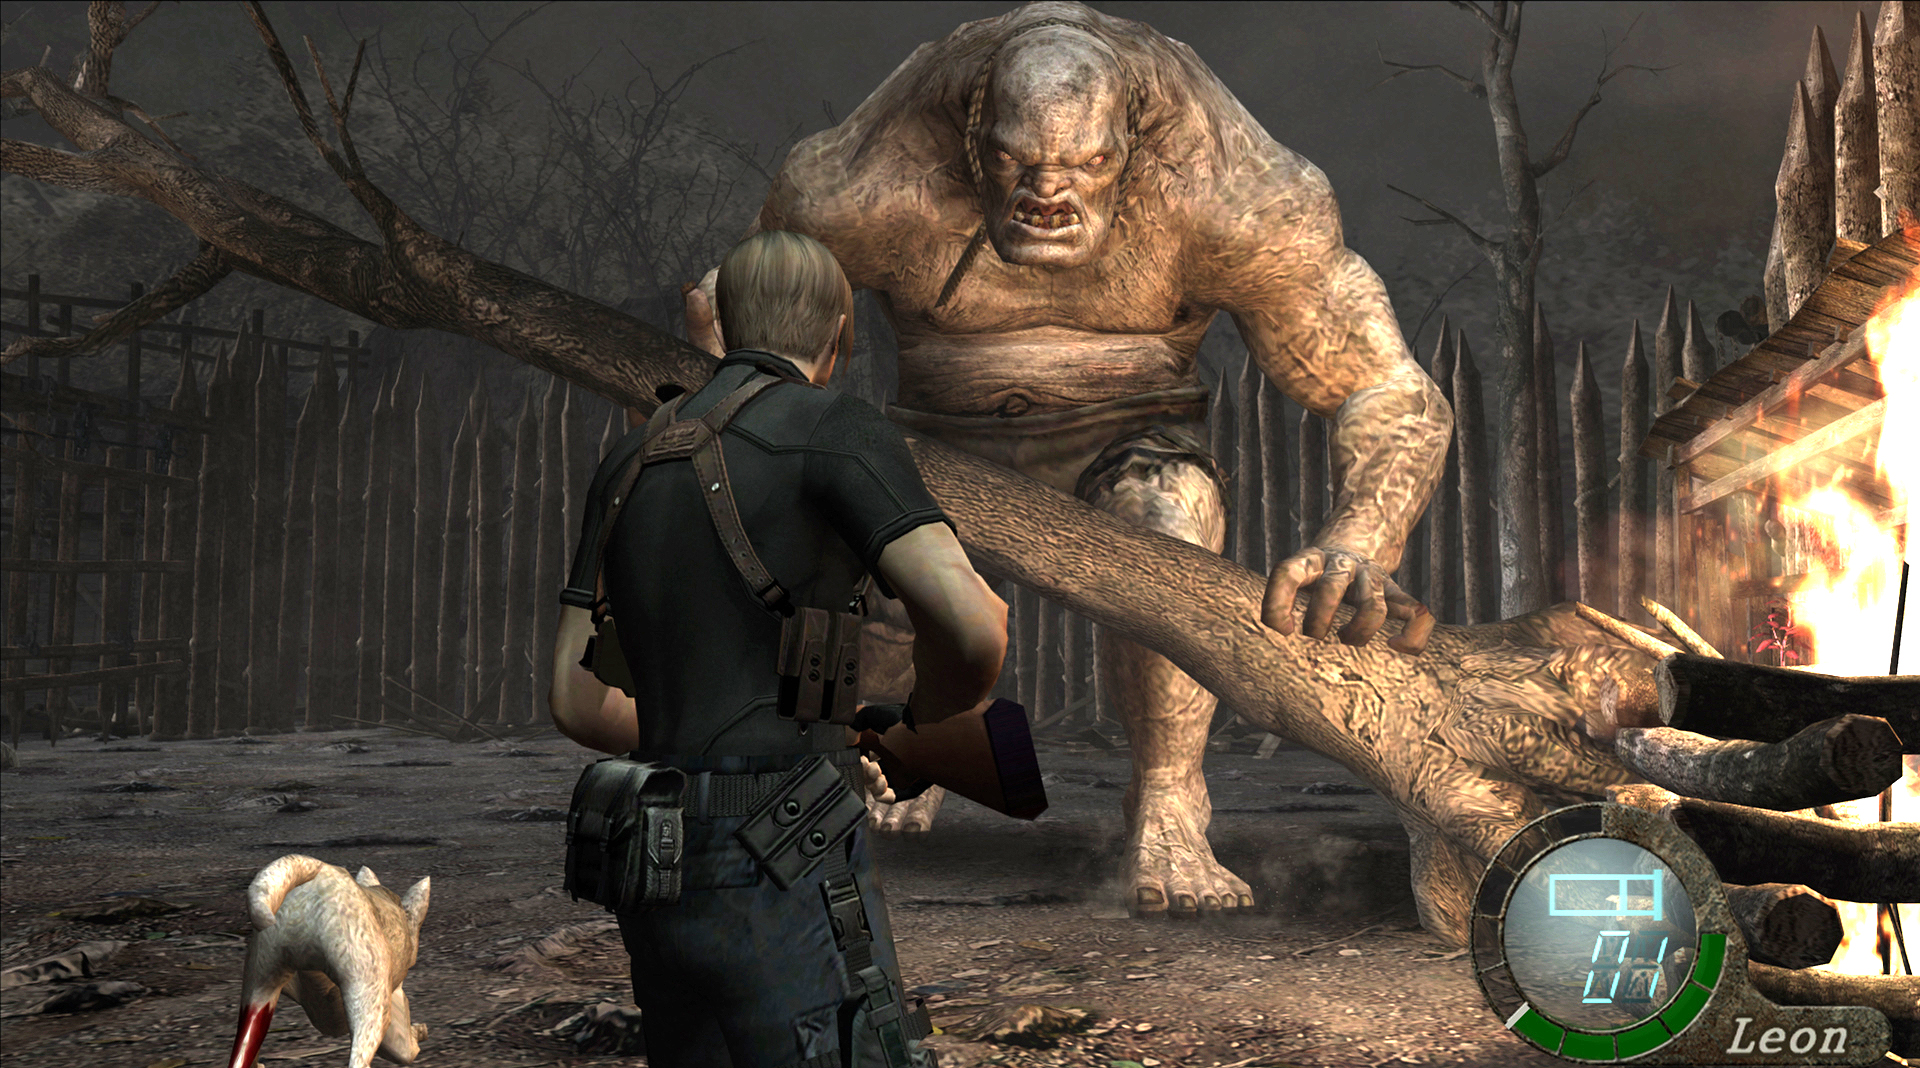 Resident Evil 4 (Video Game 2005) - IMDb